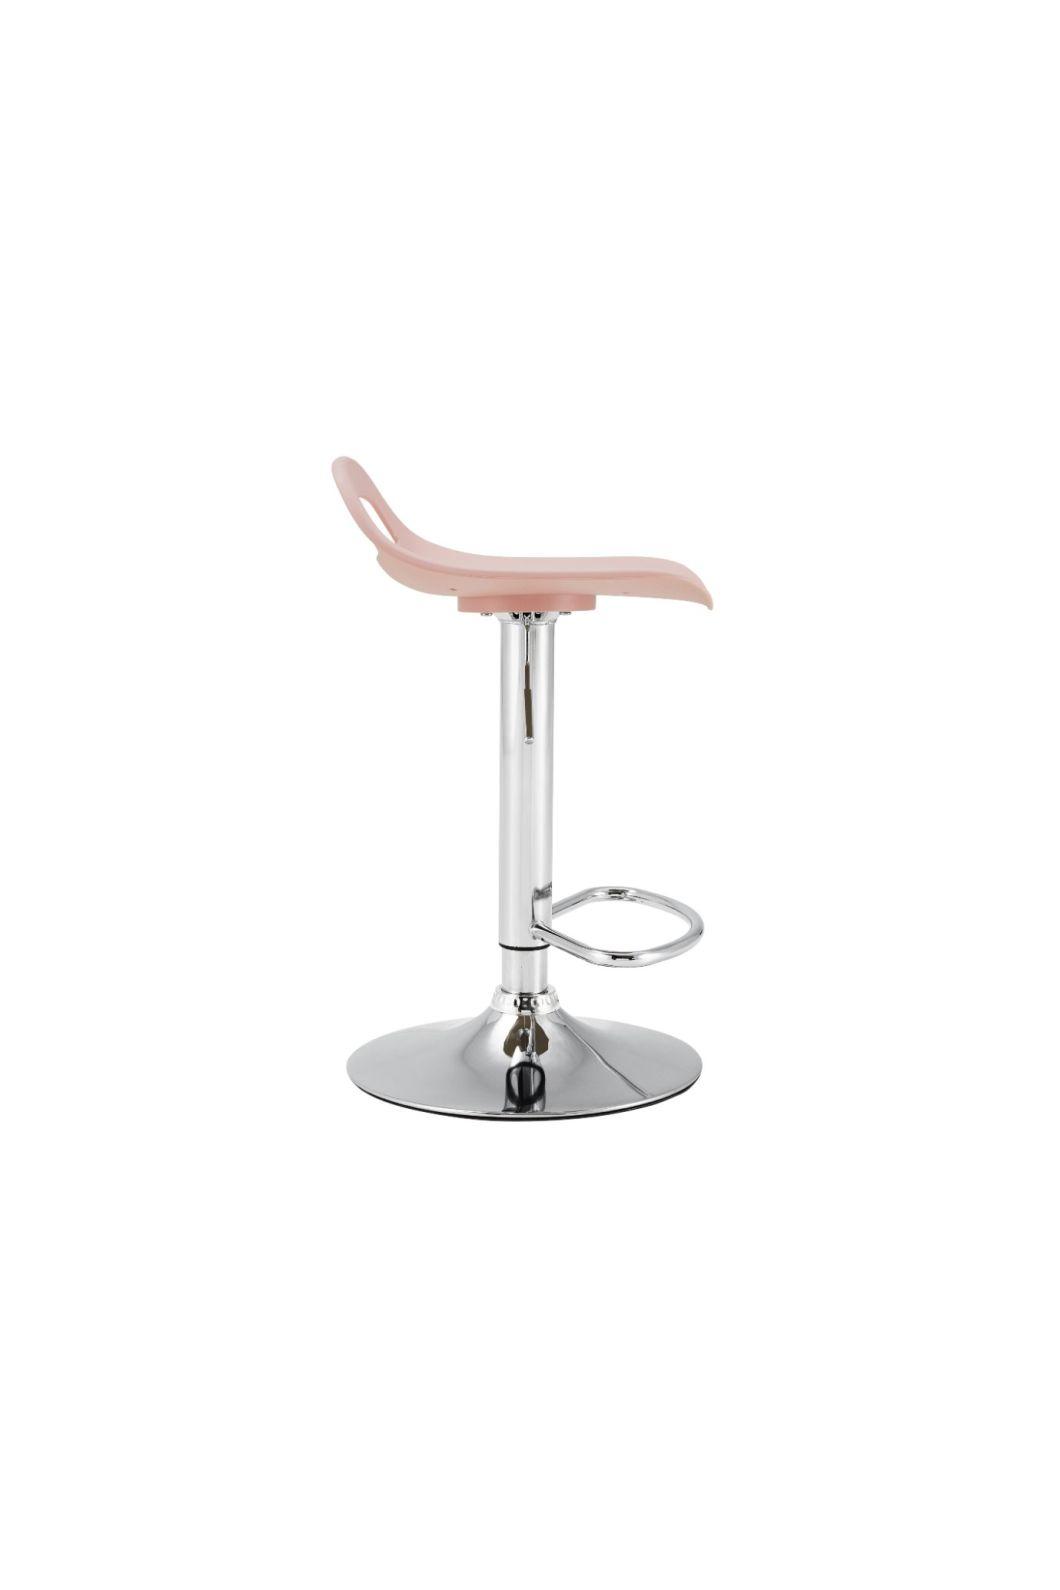 Factory Direct Wholesale Metal Leg Plastic Seat Bar Chair Modern Barstools High Chair Barstool